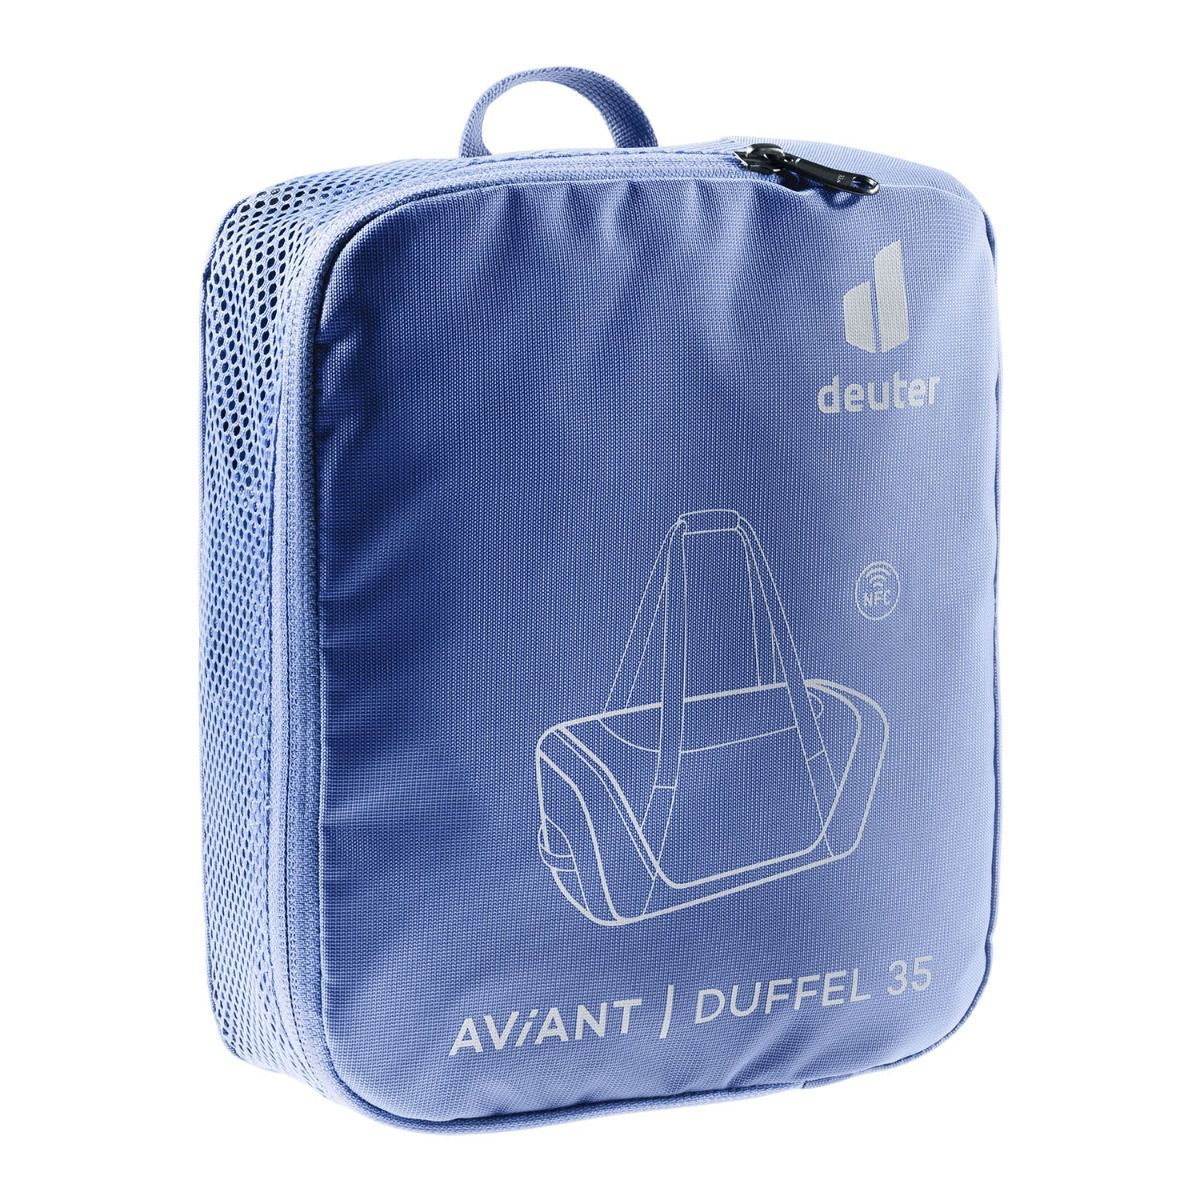 Deuter Aviant Pacific-Ink Sporttasche 35l